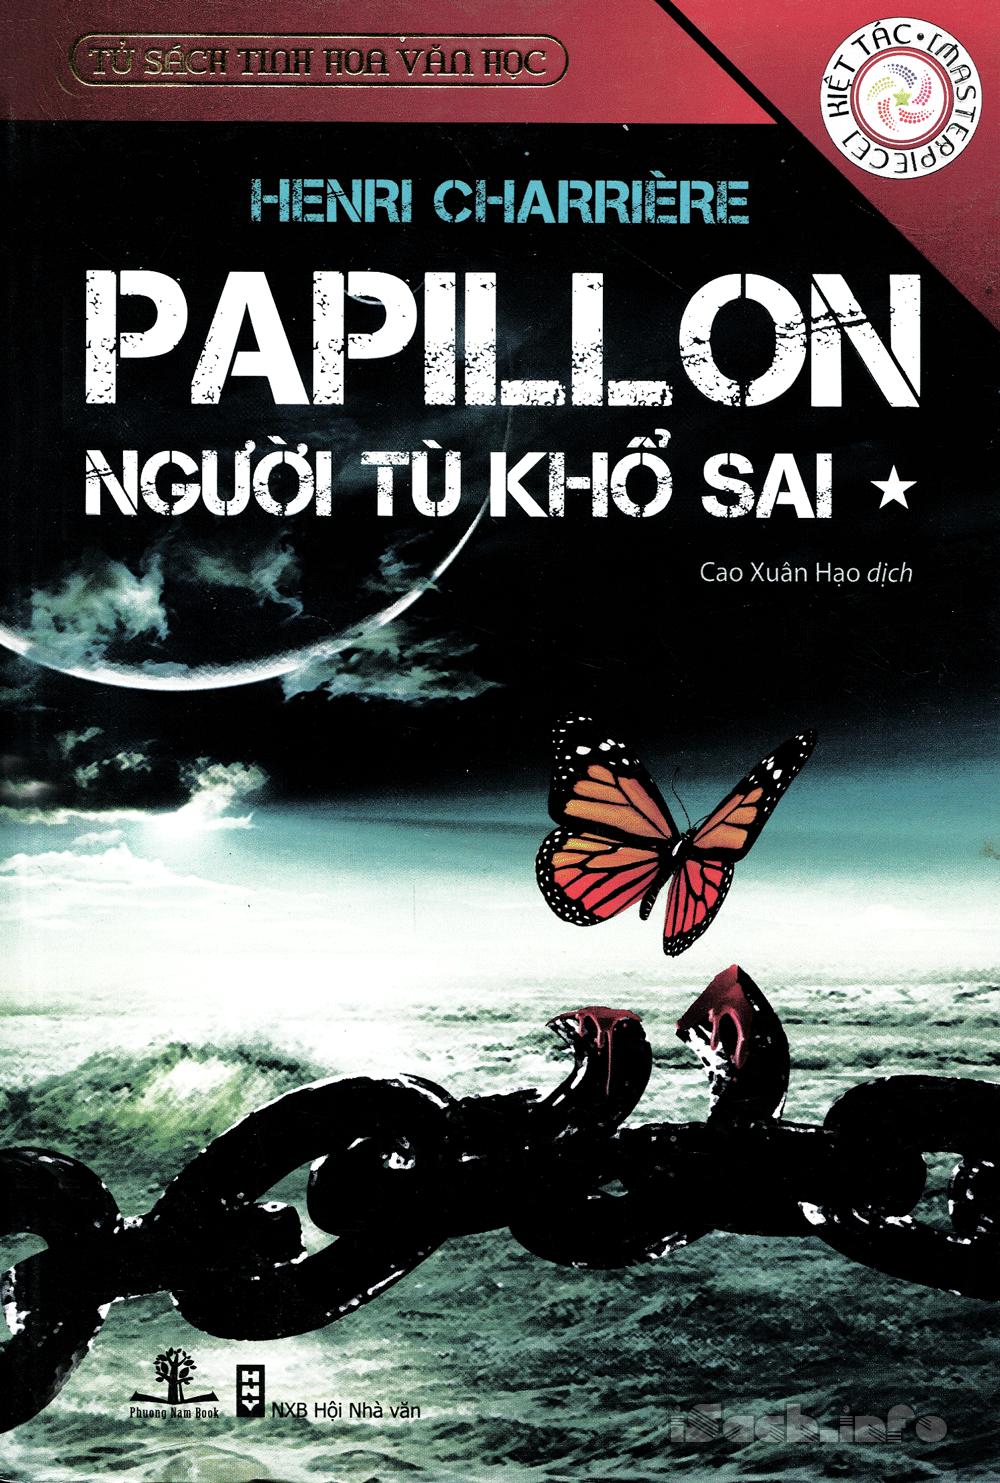 Papillon: Người tù khổ sai